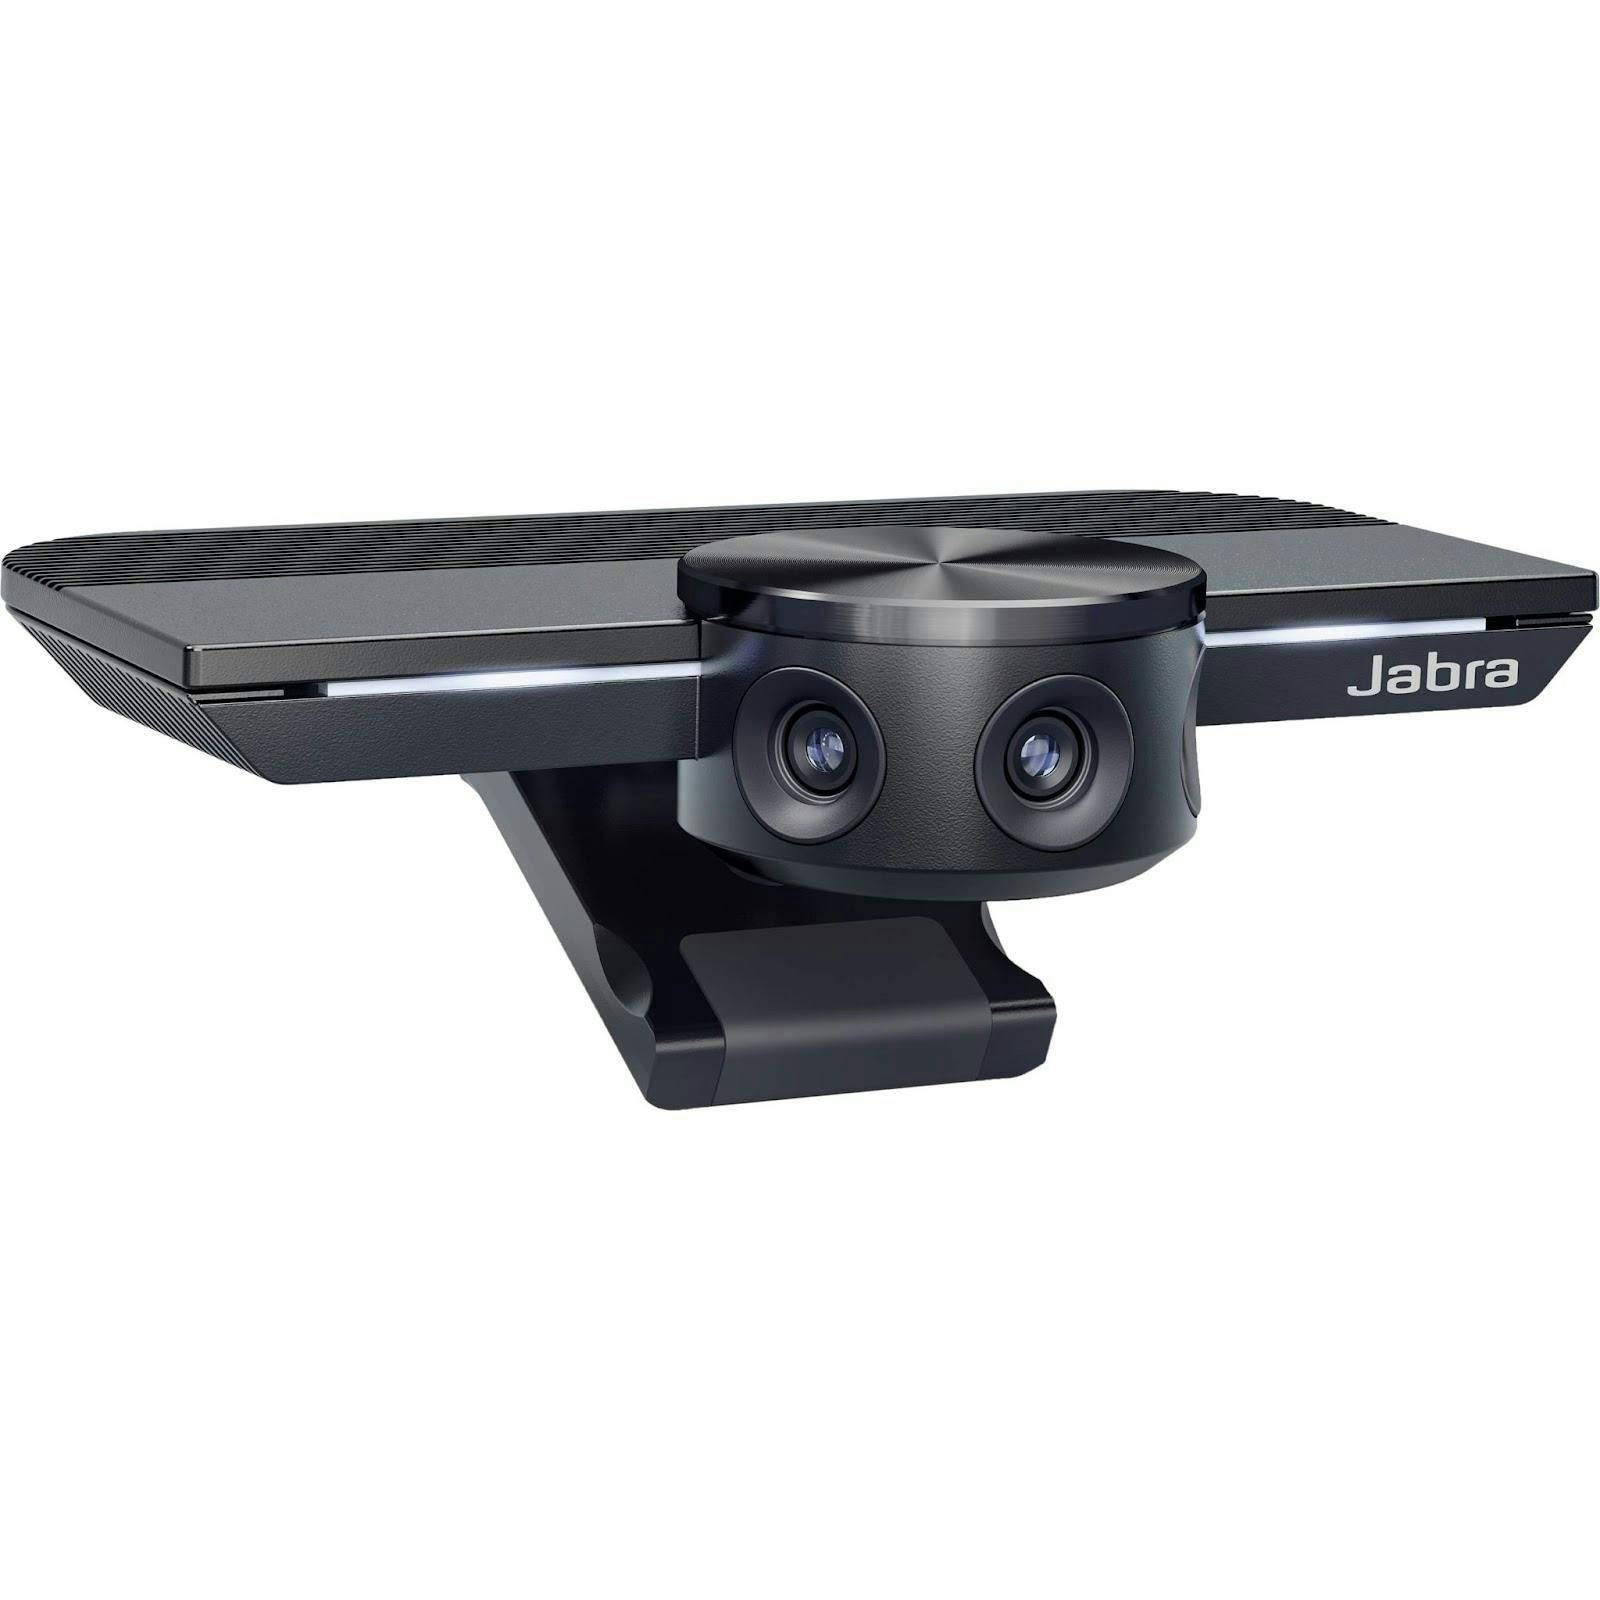 Jabra PanaCast is a premium webcam option for YouTube recording